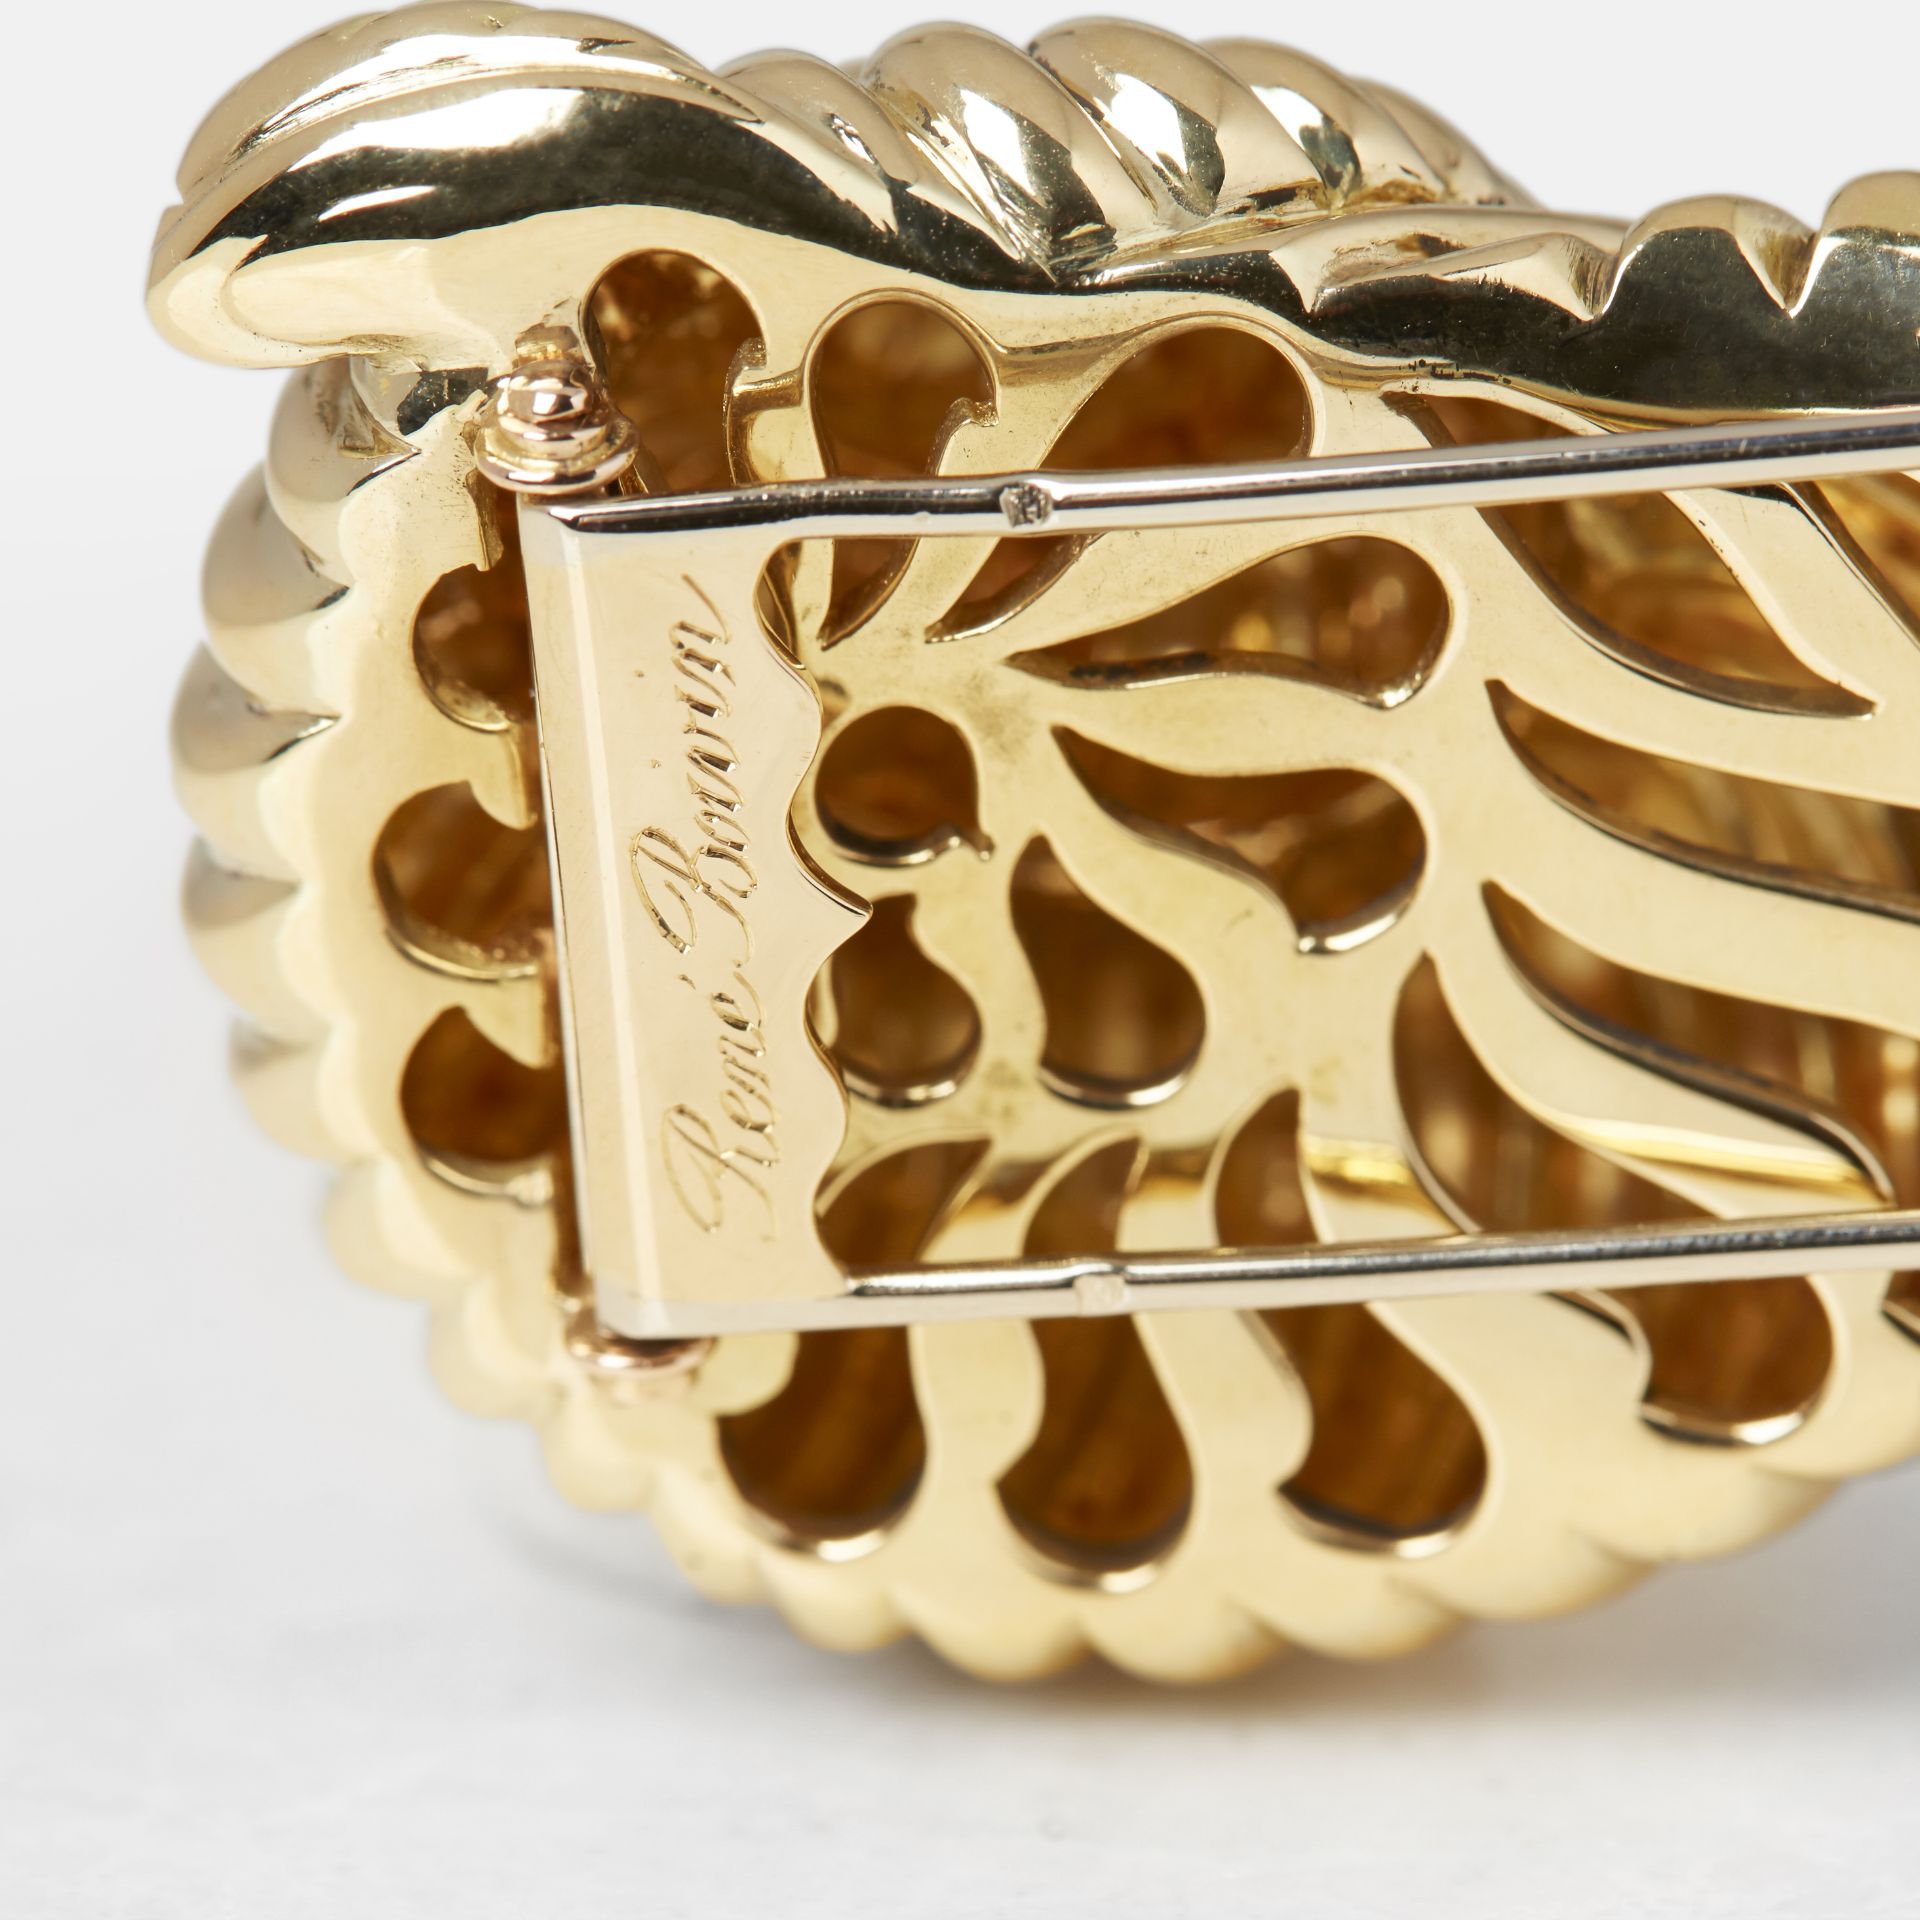 Rene Boivin 18k Yellow Gold Diamond Snail Brooch with Presentation Box - Image 19 of 19